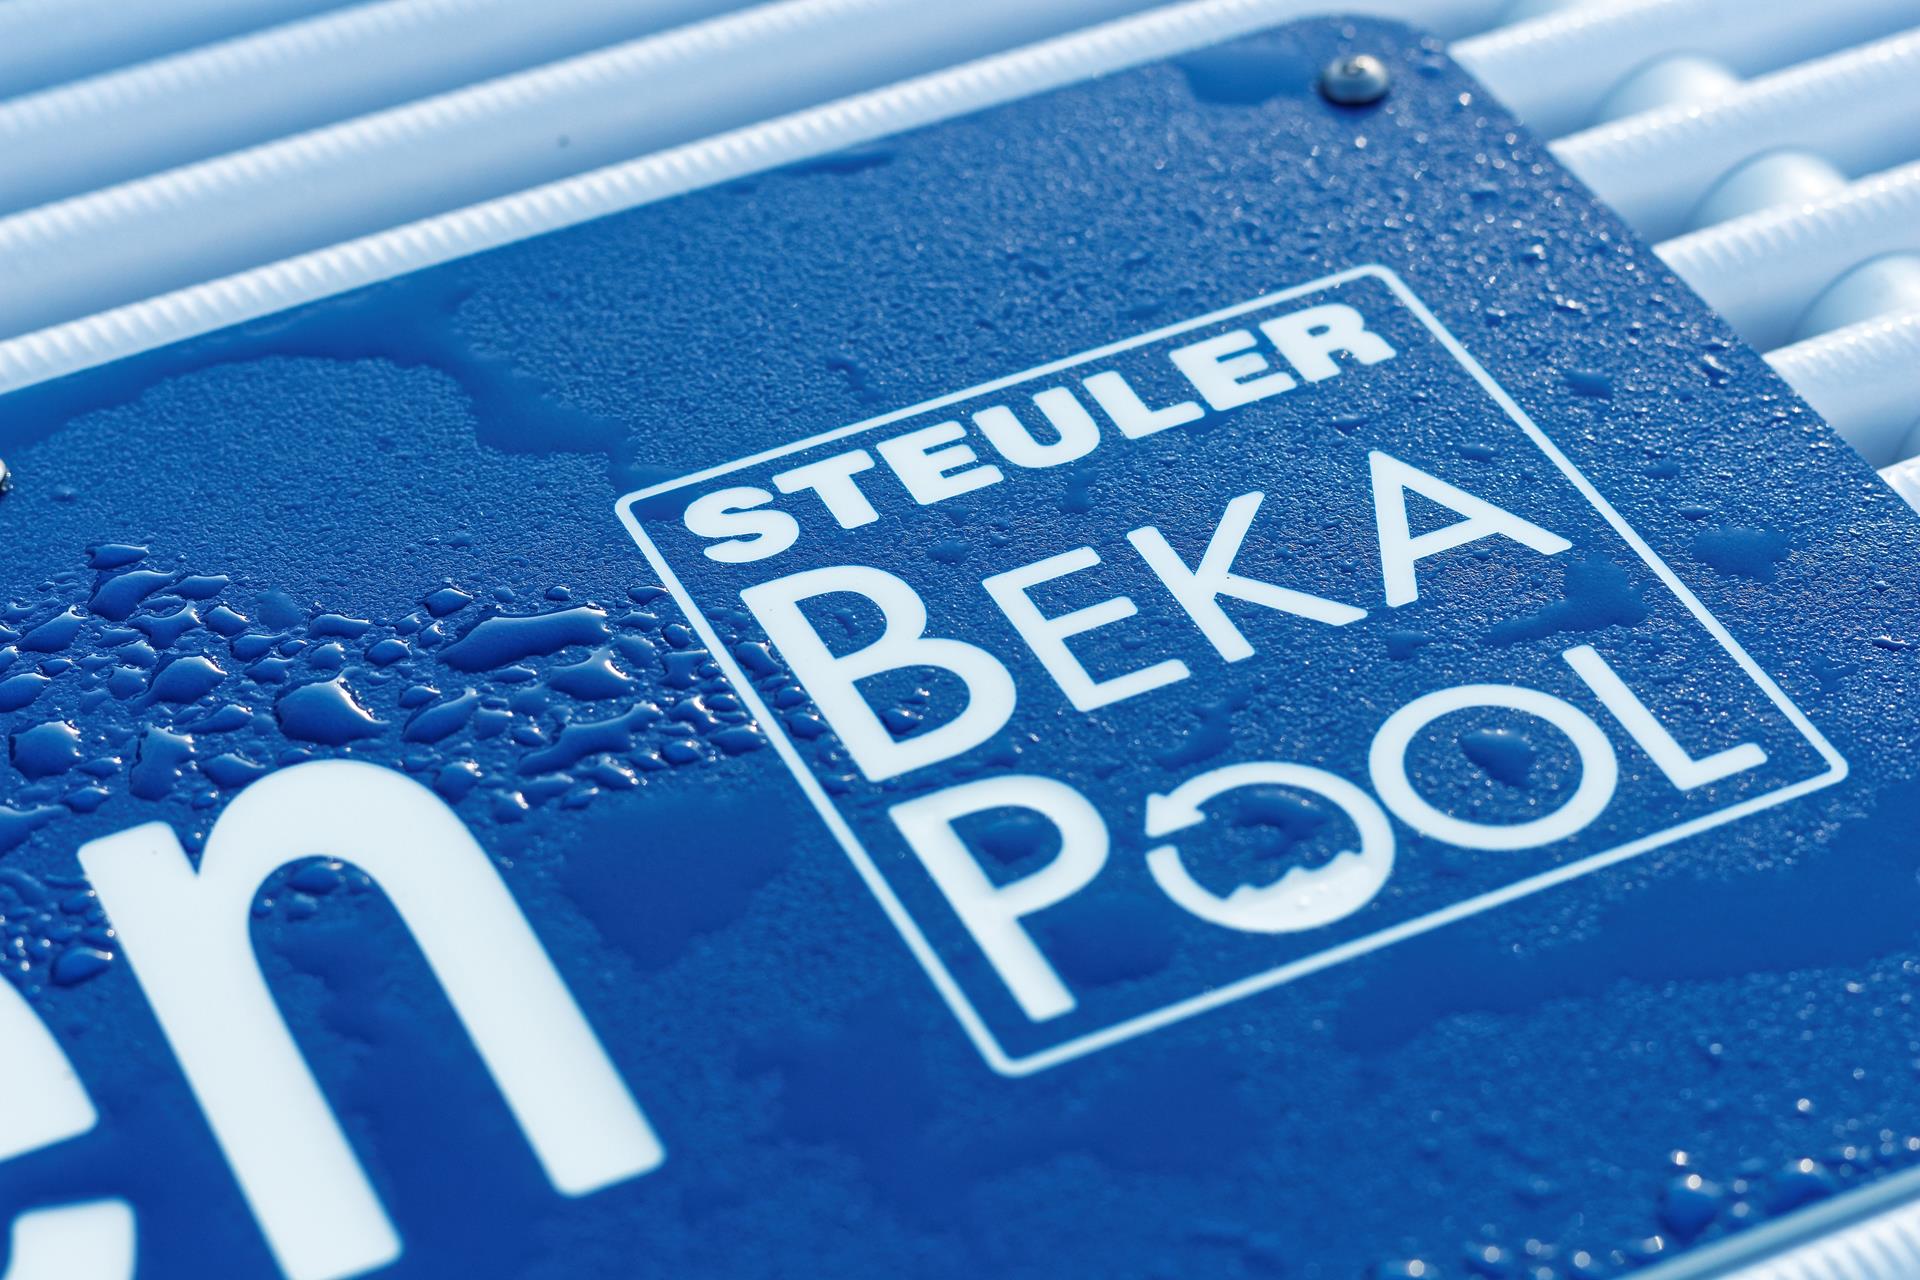 Osnabrueck Nettebad - Steuler Pool Linings